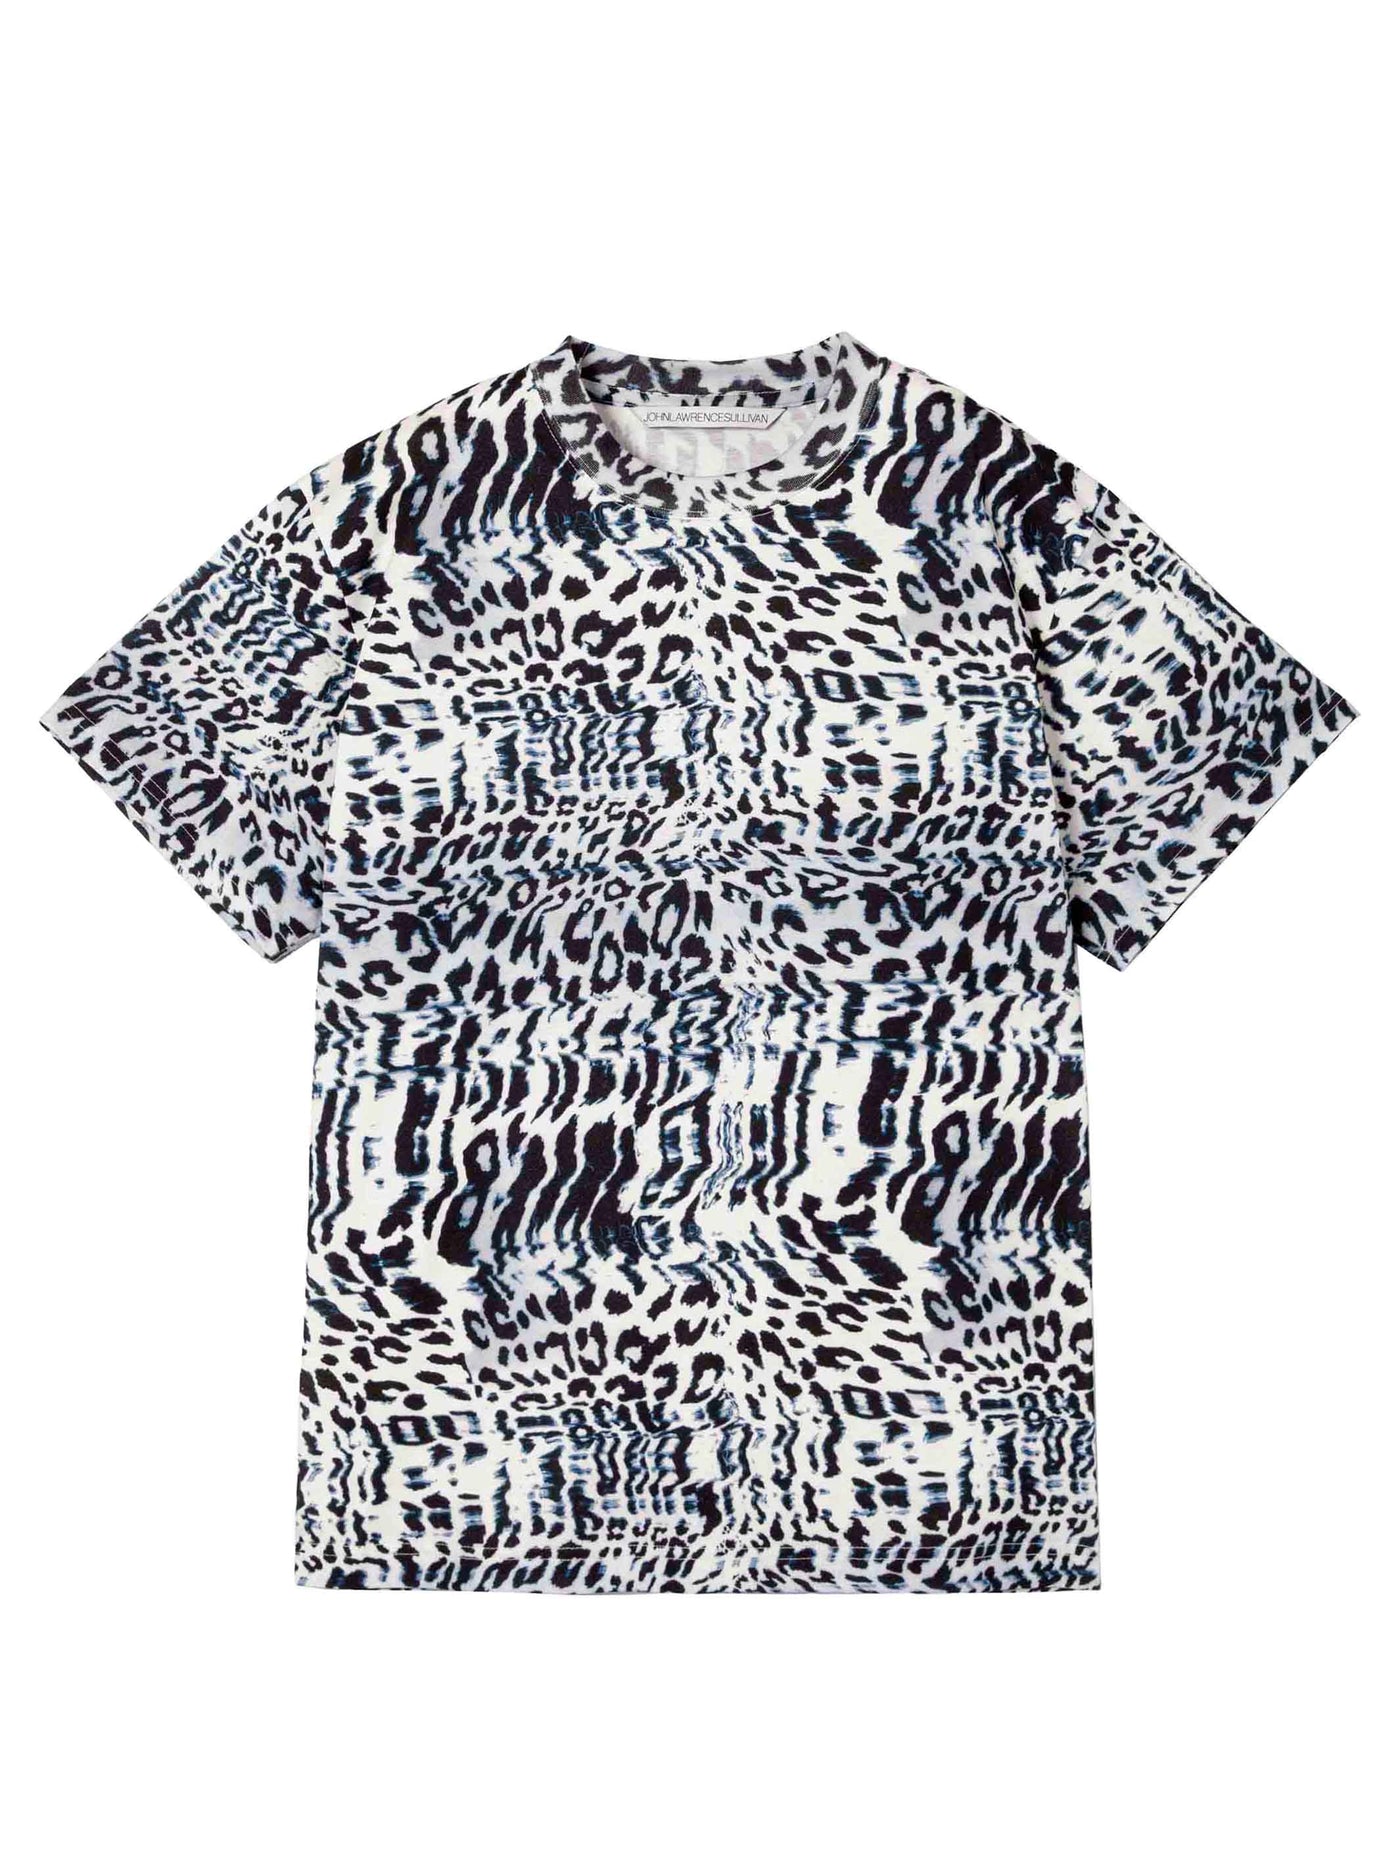 Leopard print t-shirt